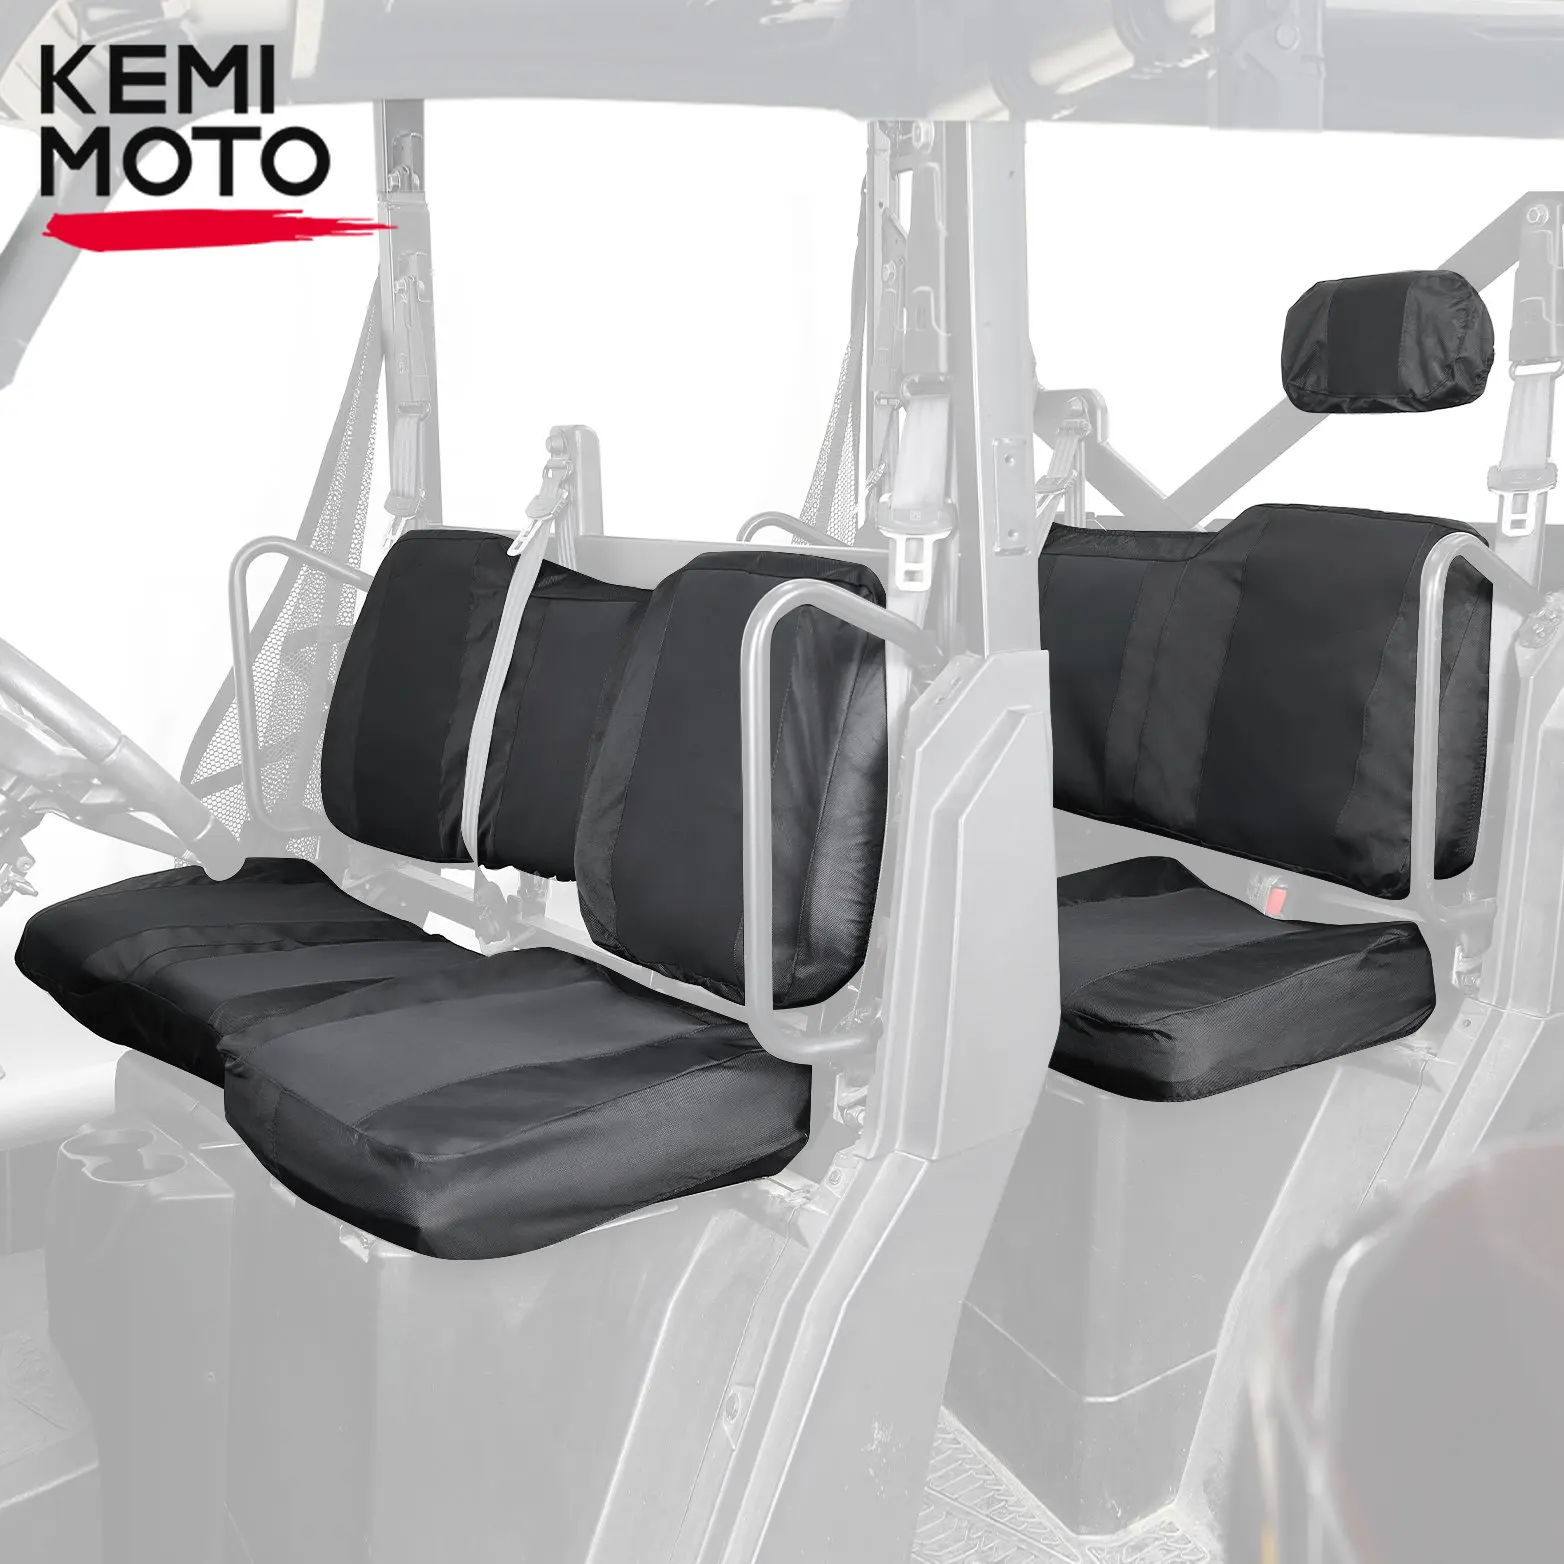 KEMIMOTO Crew Seat Set Covers with Headrest Compatible with Ranger Crew XP 1000 / Crew 1000 Premium / Crew XP 1000 2017-2023 1000 record covers